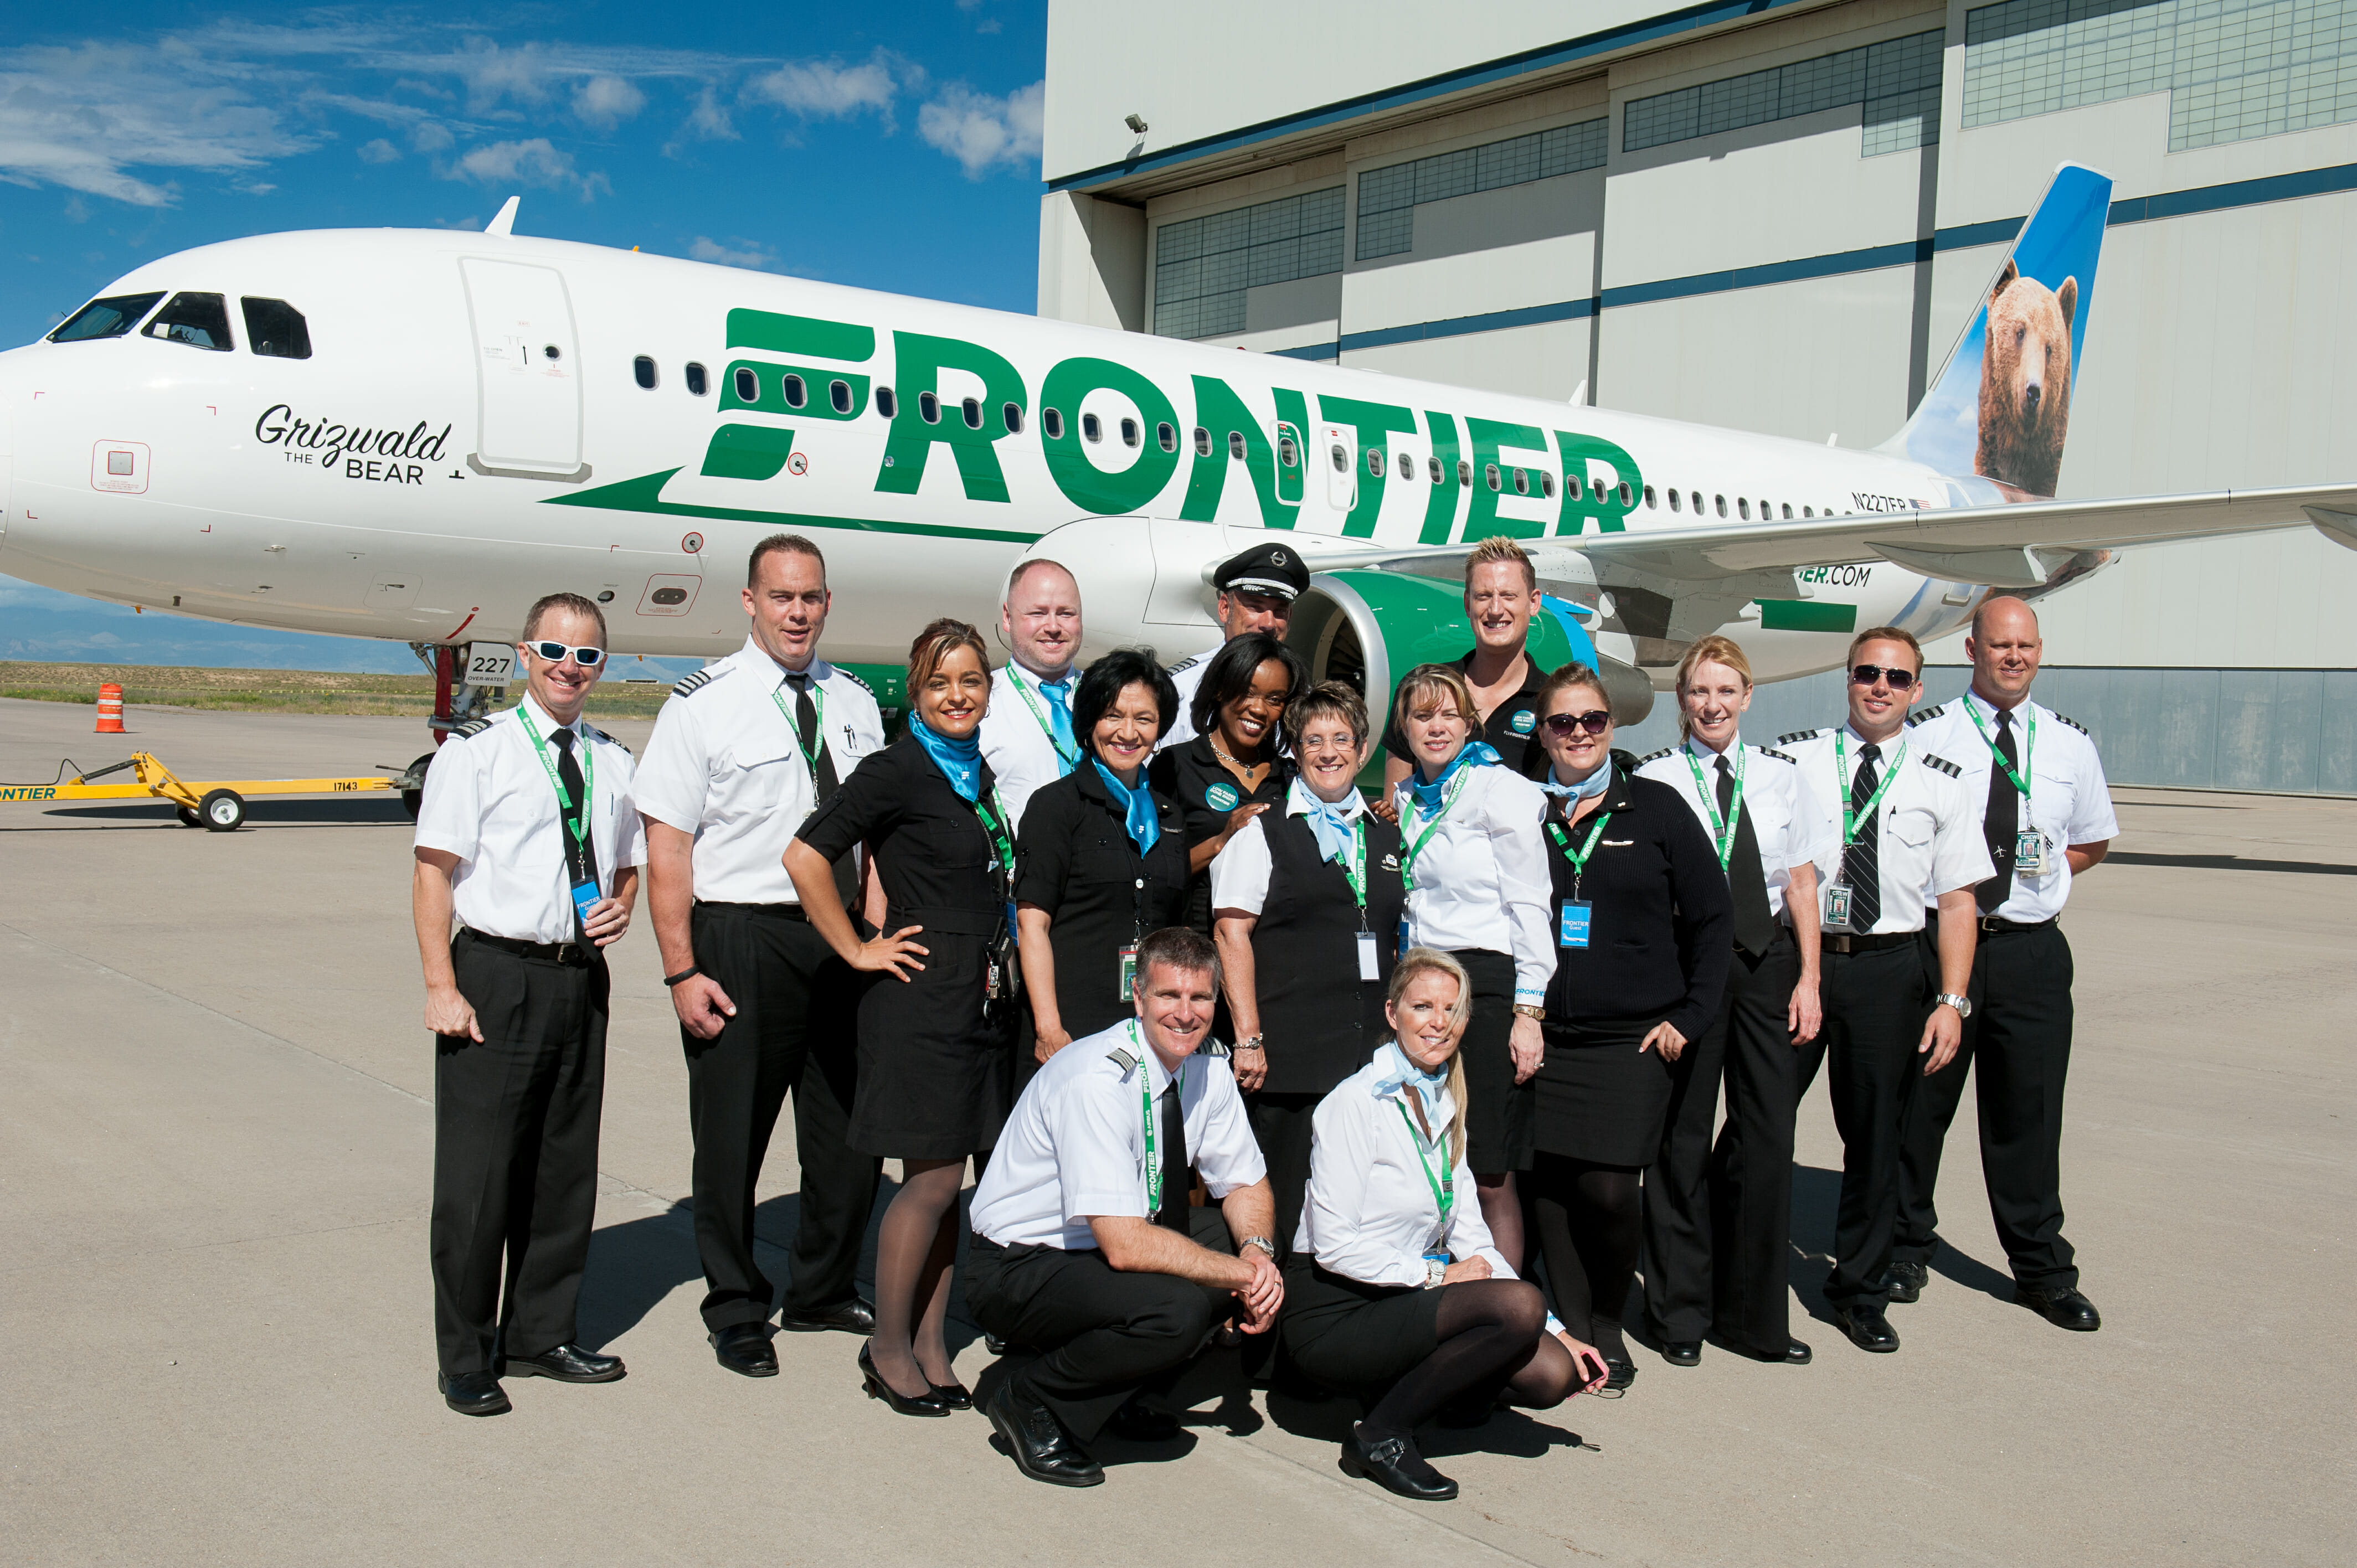 Frontier Airlines announces it's new rebranding at the Frontier hangar at Denver International Airport.. Sept 9, 2014. Photo by Ellen Jaskol.